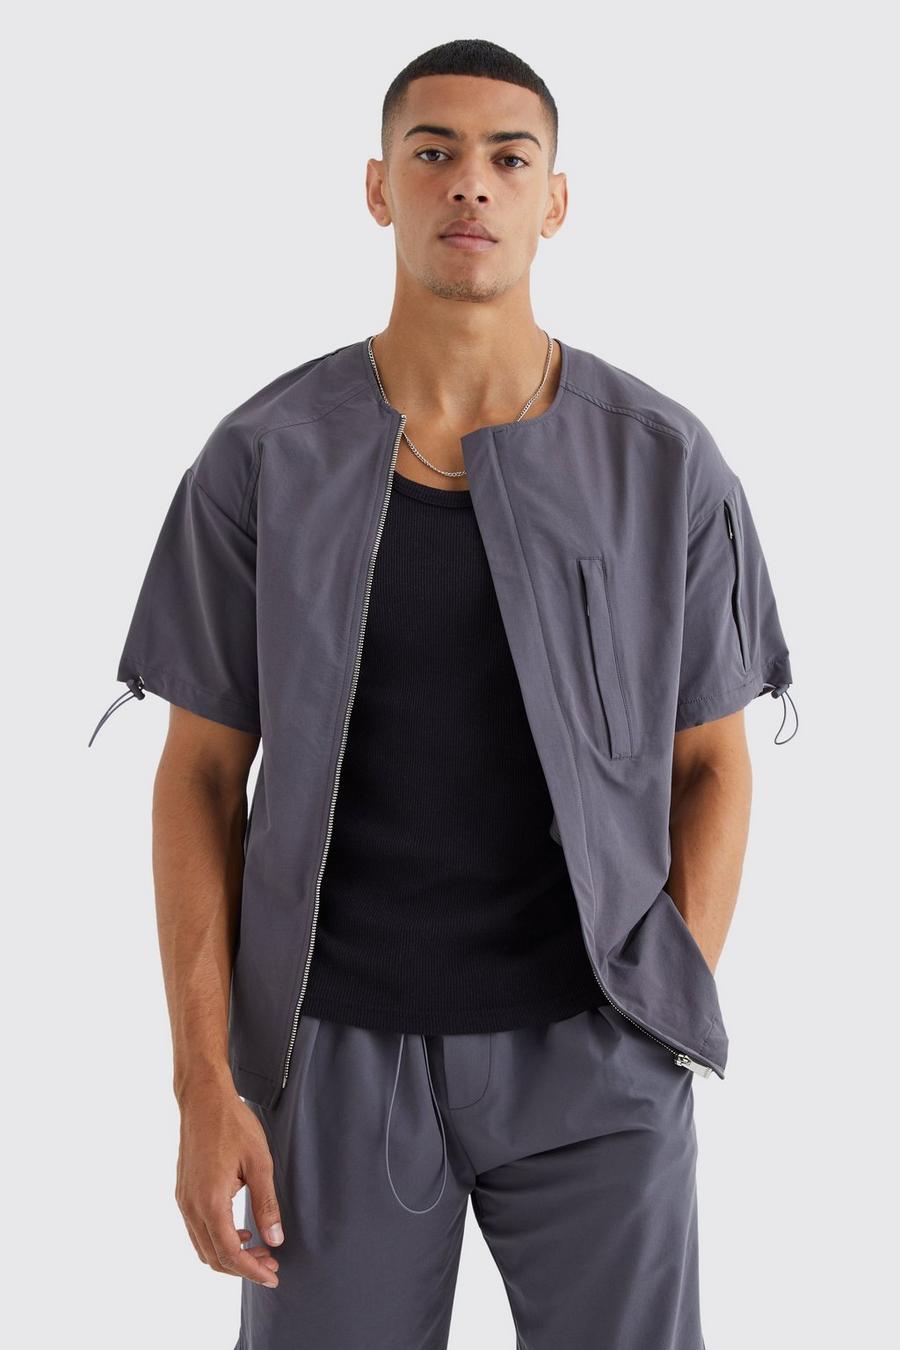 Charcoal grey Short Sleeve Collarless Technical Zip Shirt